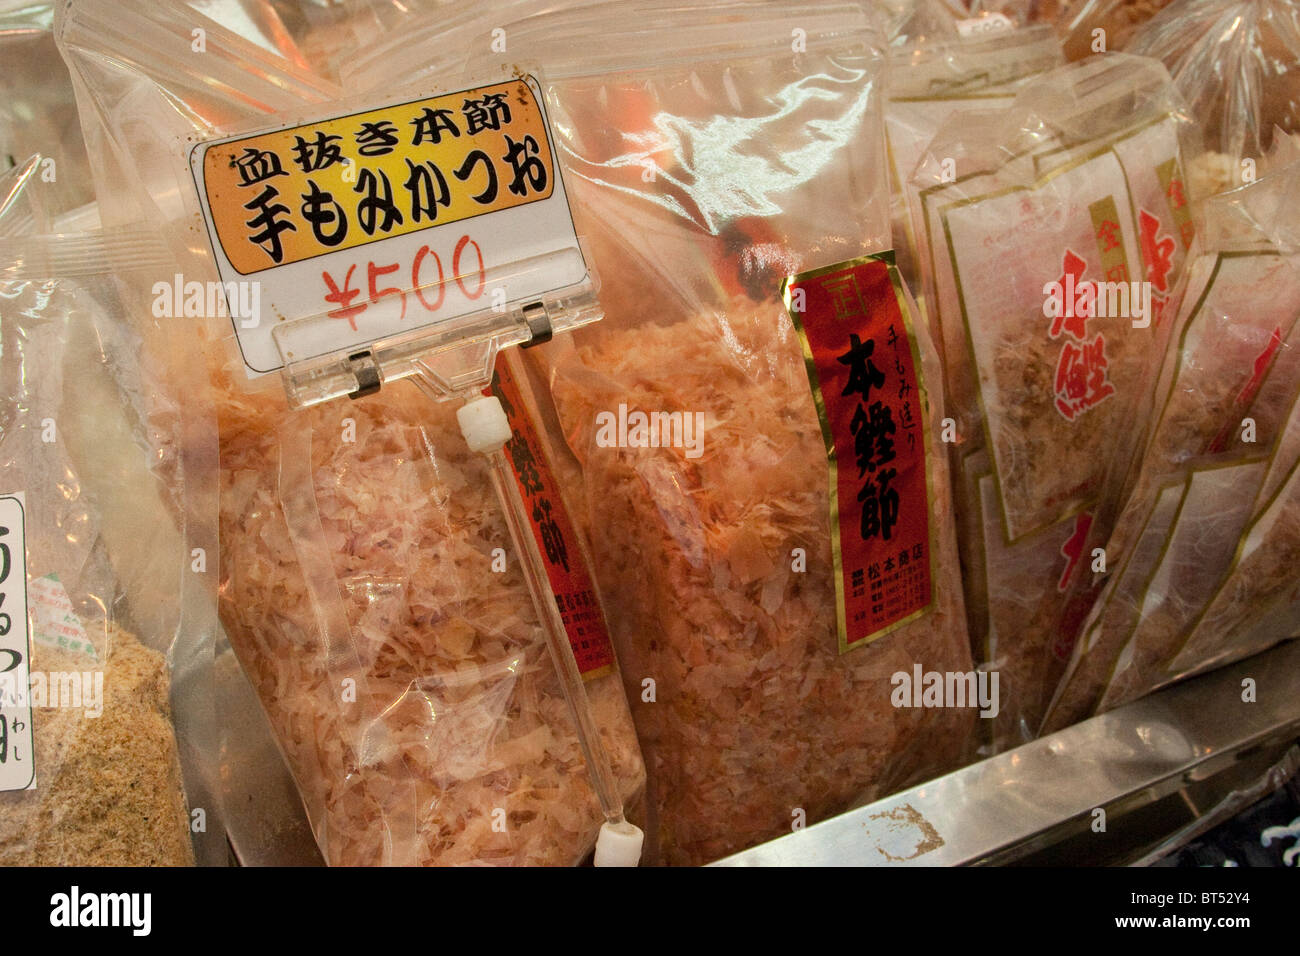 Bags of Katsuobushi shavings, dried, fermented and smoked skipjack tuna, also known as bonito fish, in market in Okinawa Japan Stock Photo